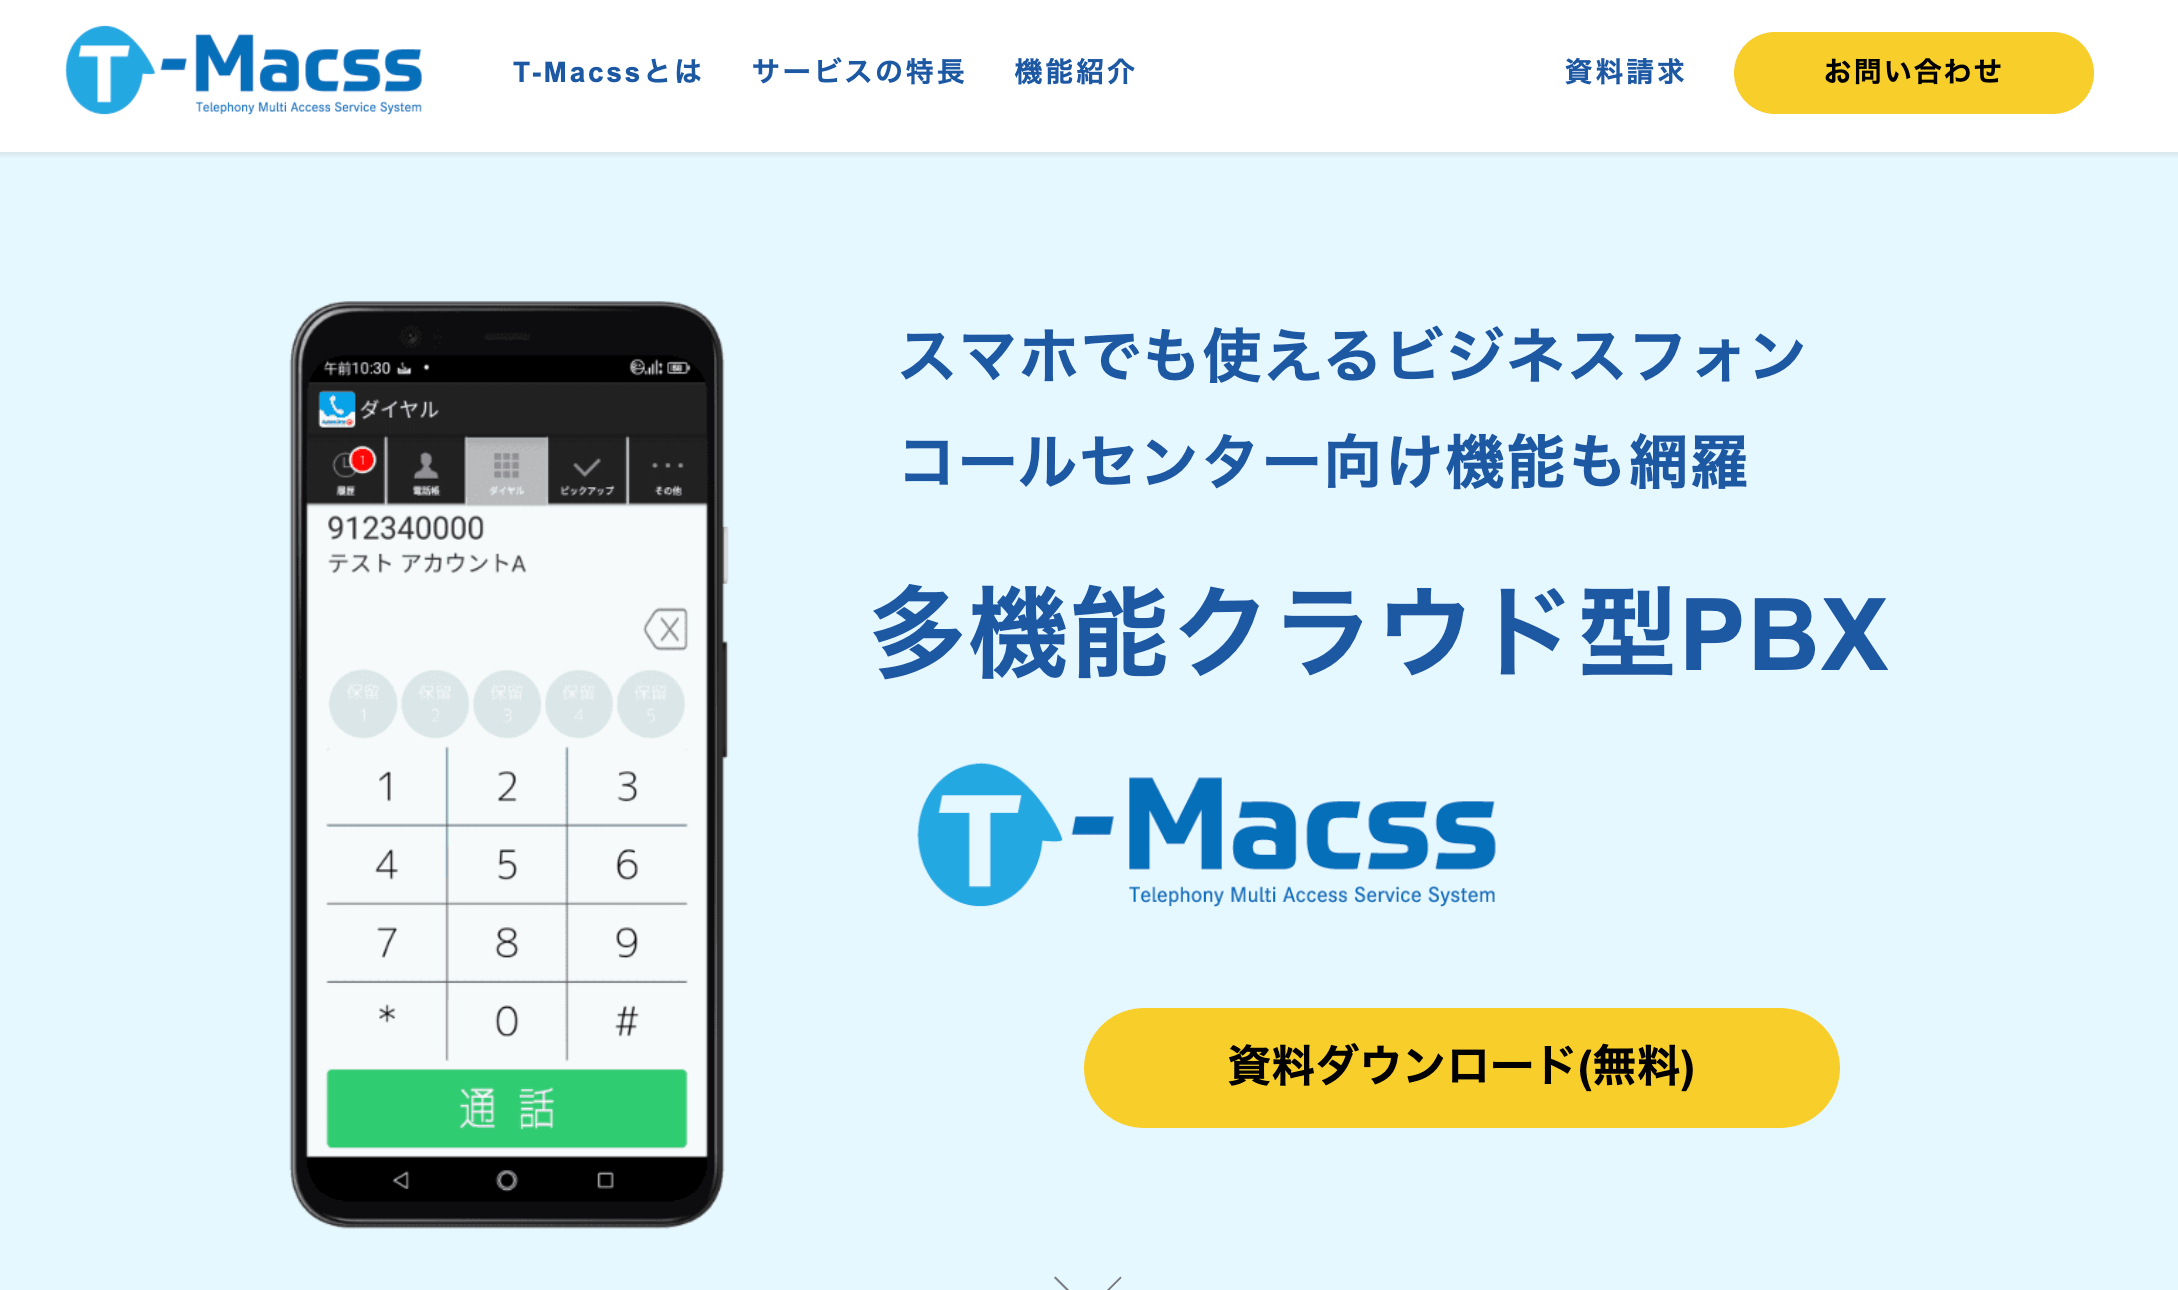 T-Macss